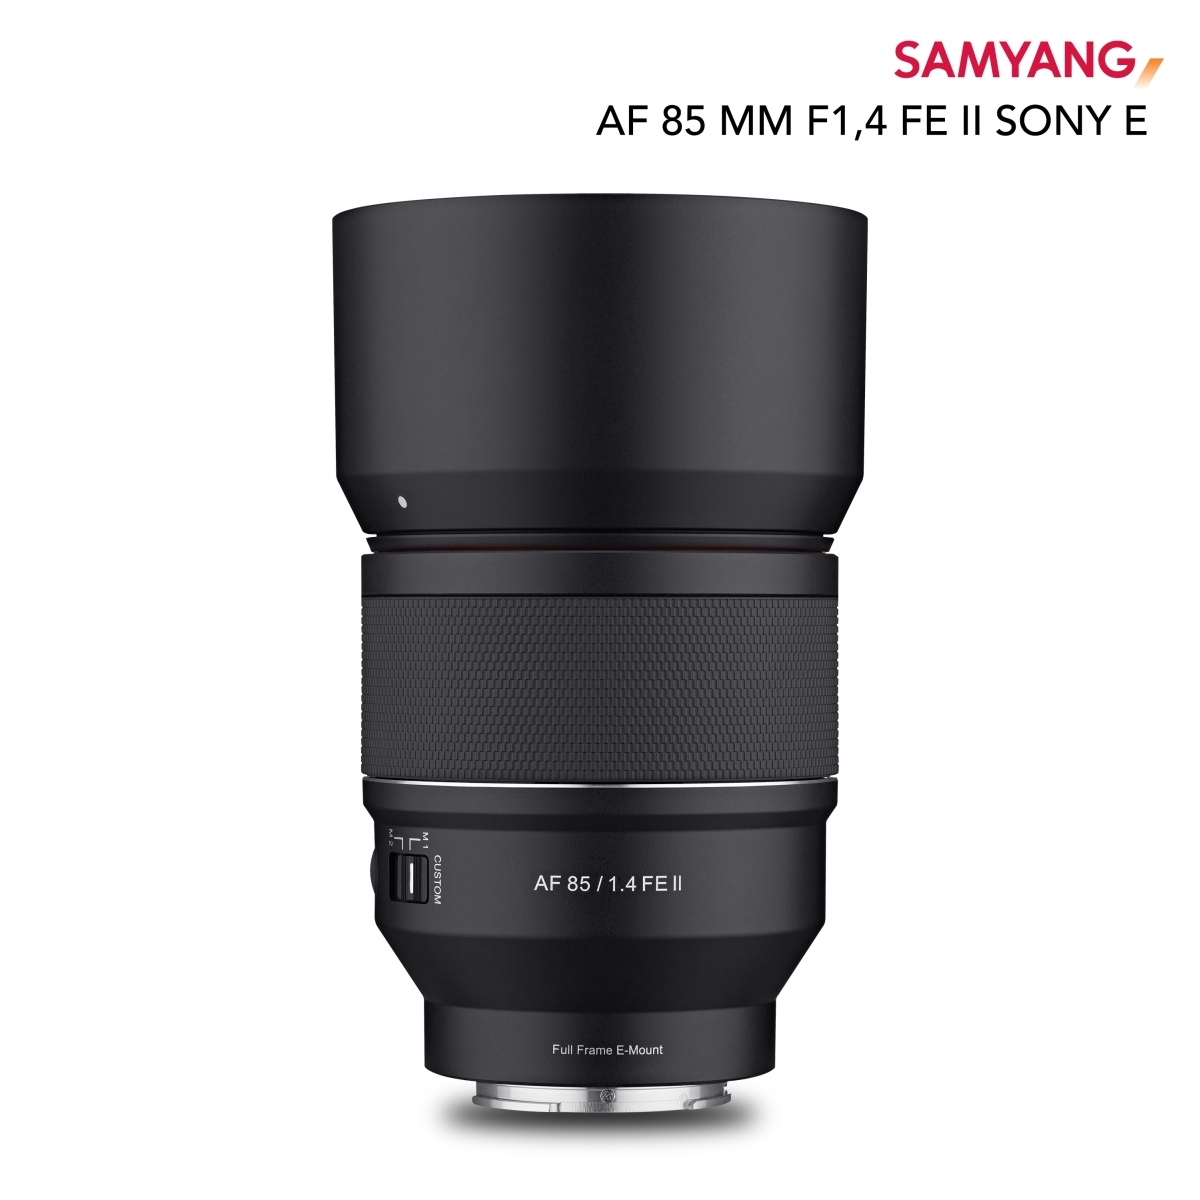 Samyang AF 85mm F1,4 FE II pour Sony E, objectif portrait professionnel